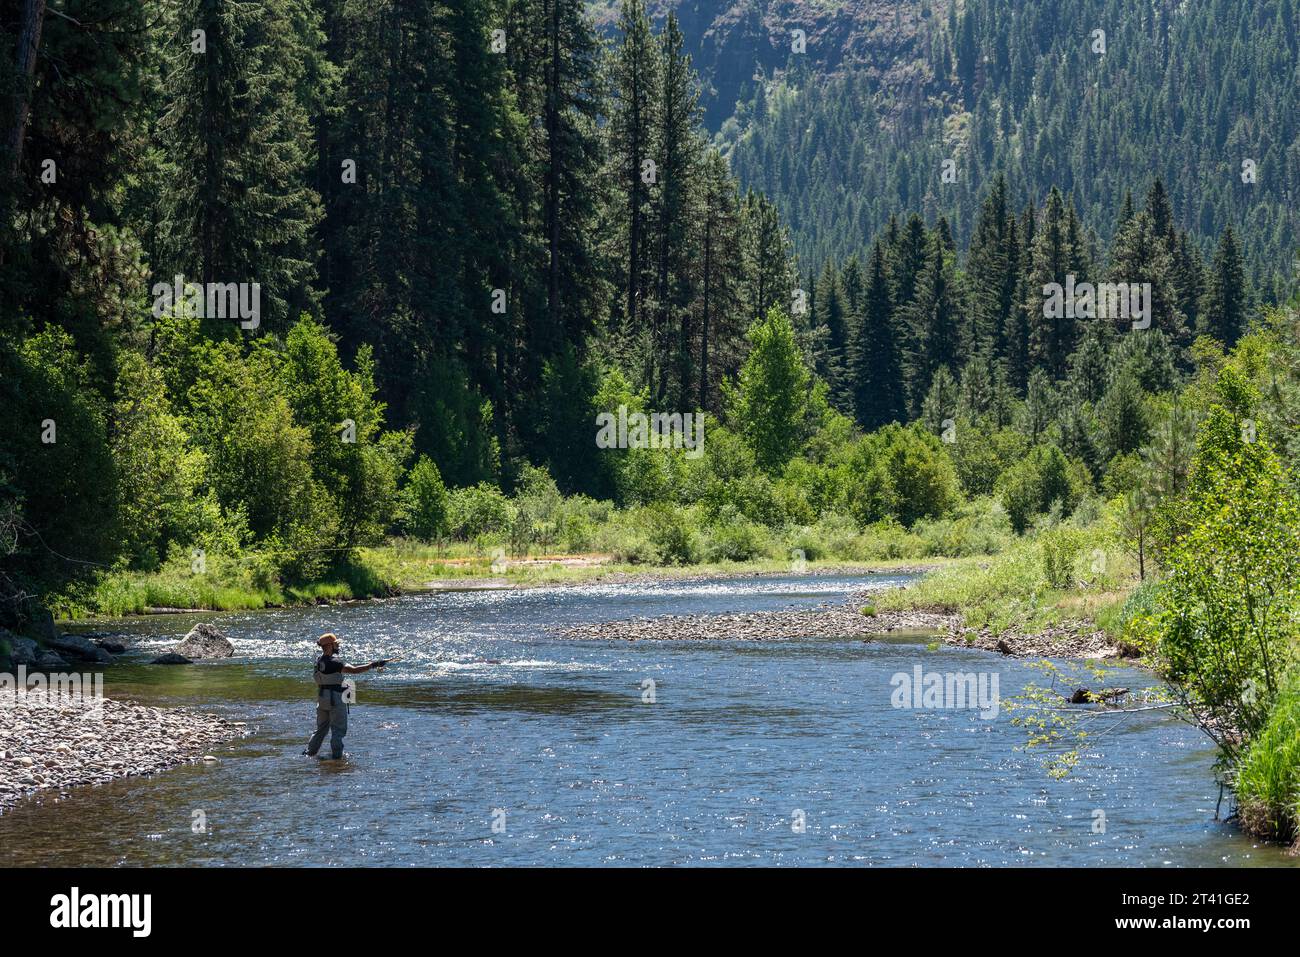 Fly fishing on the Minam Wild & Scenic River, Wallowa Mountains, Oregon. Stock Photo